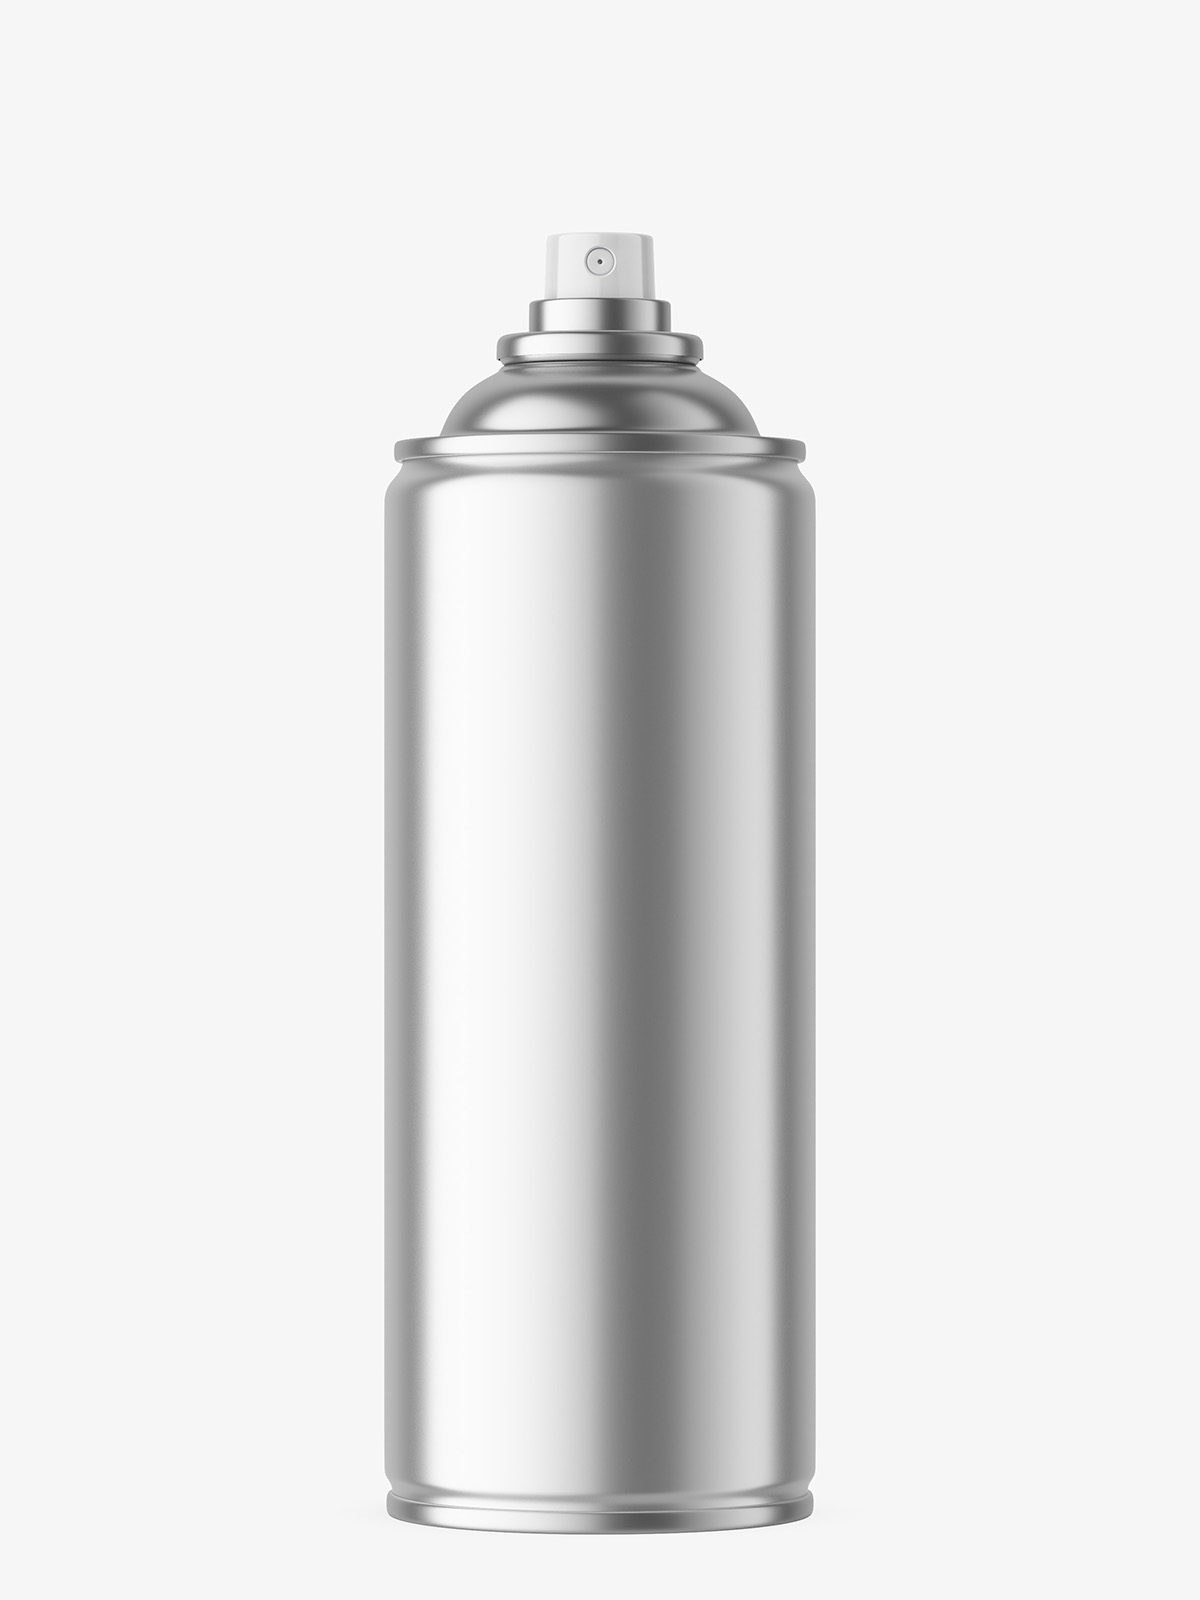 Download Metallic aerosol can mockup - Smarty Mockups